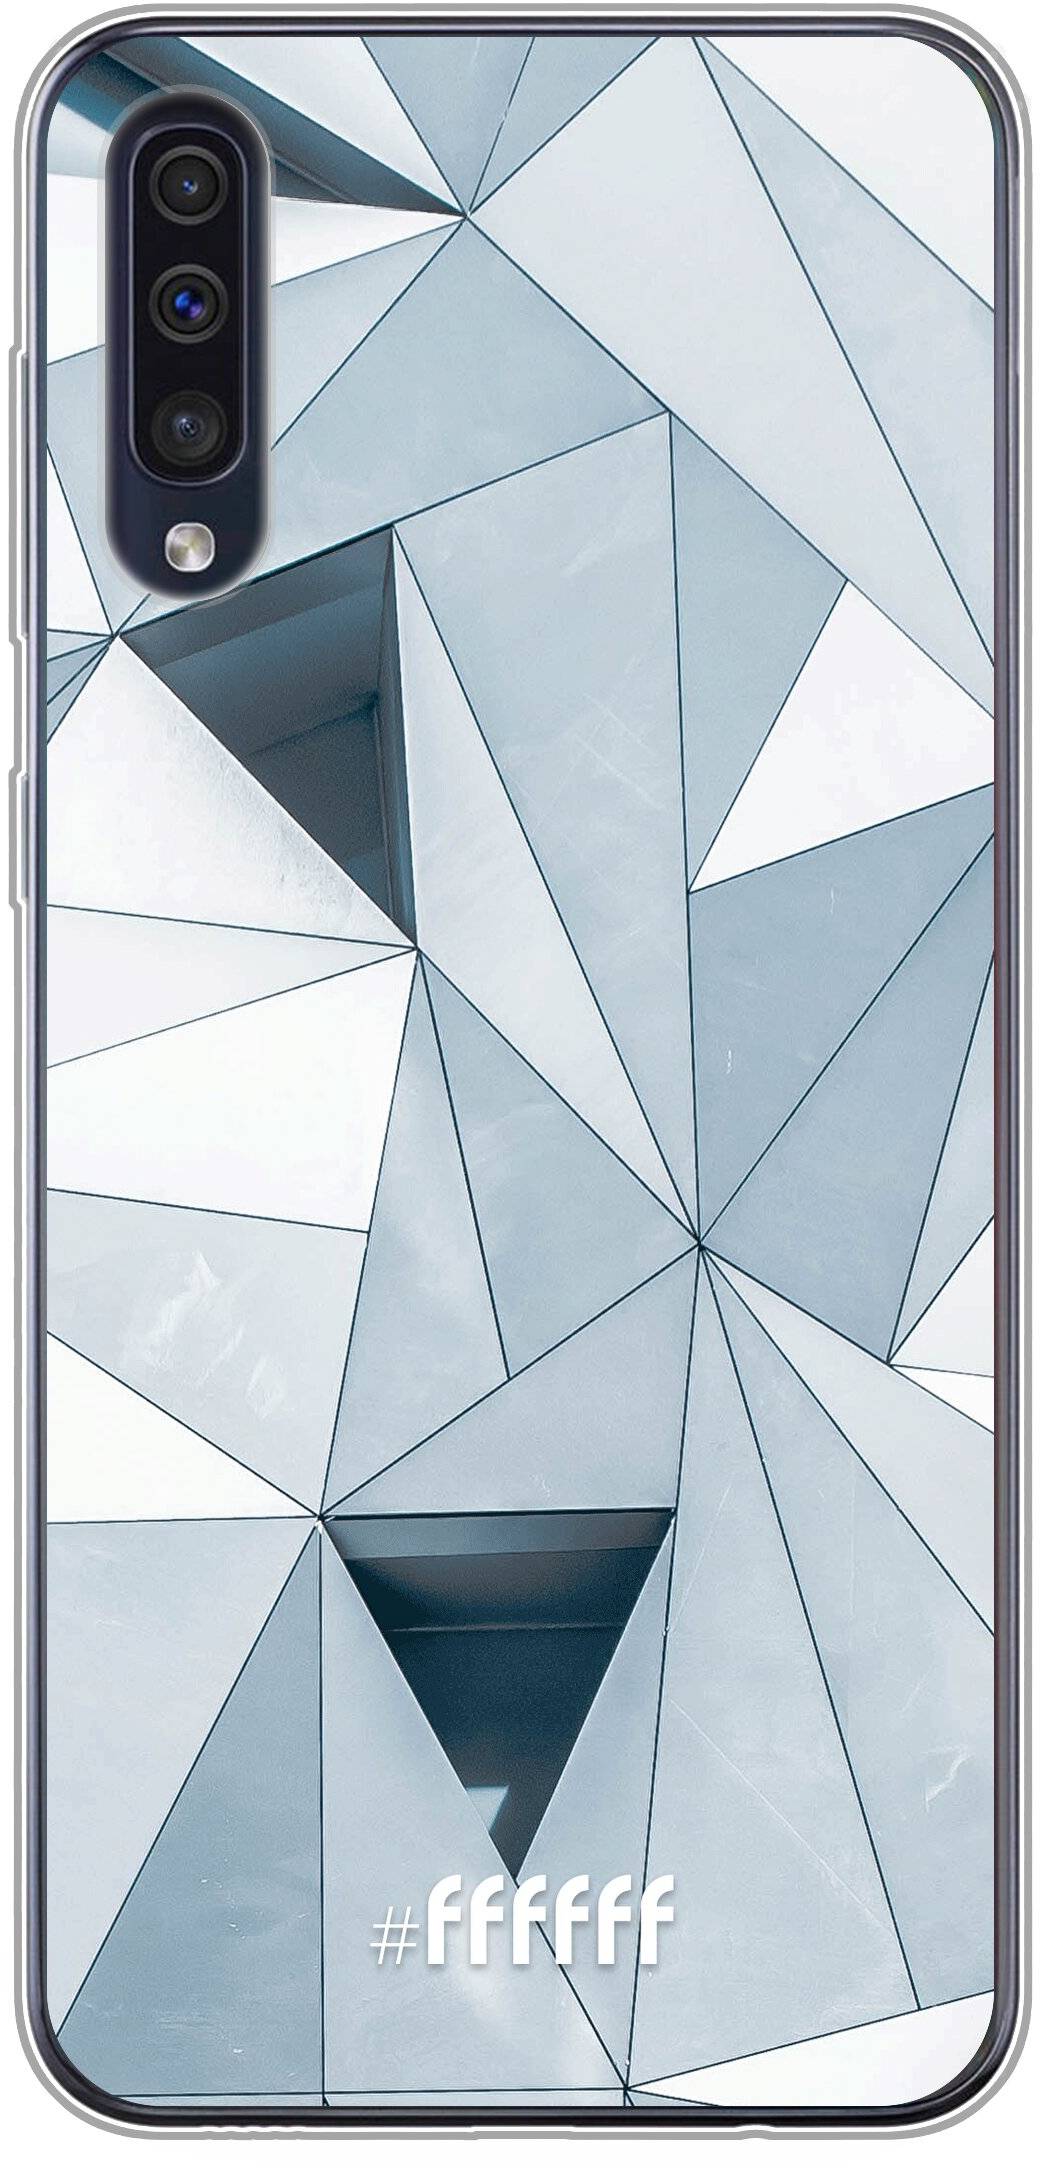 Mirrored Polygon Galaxy A50s